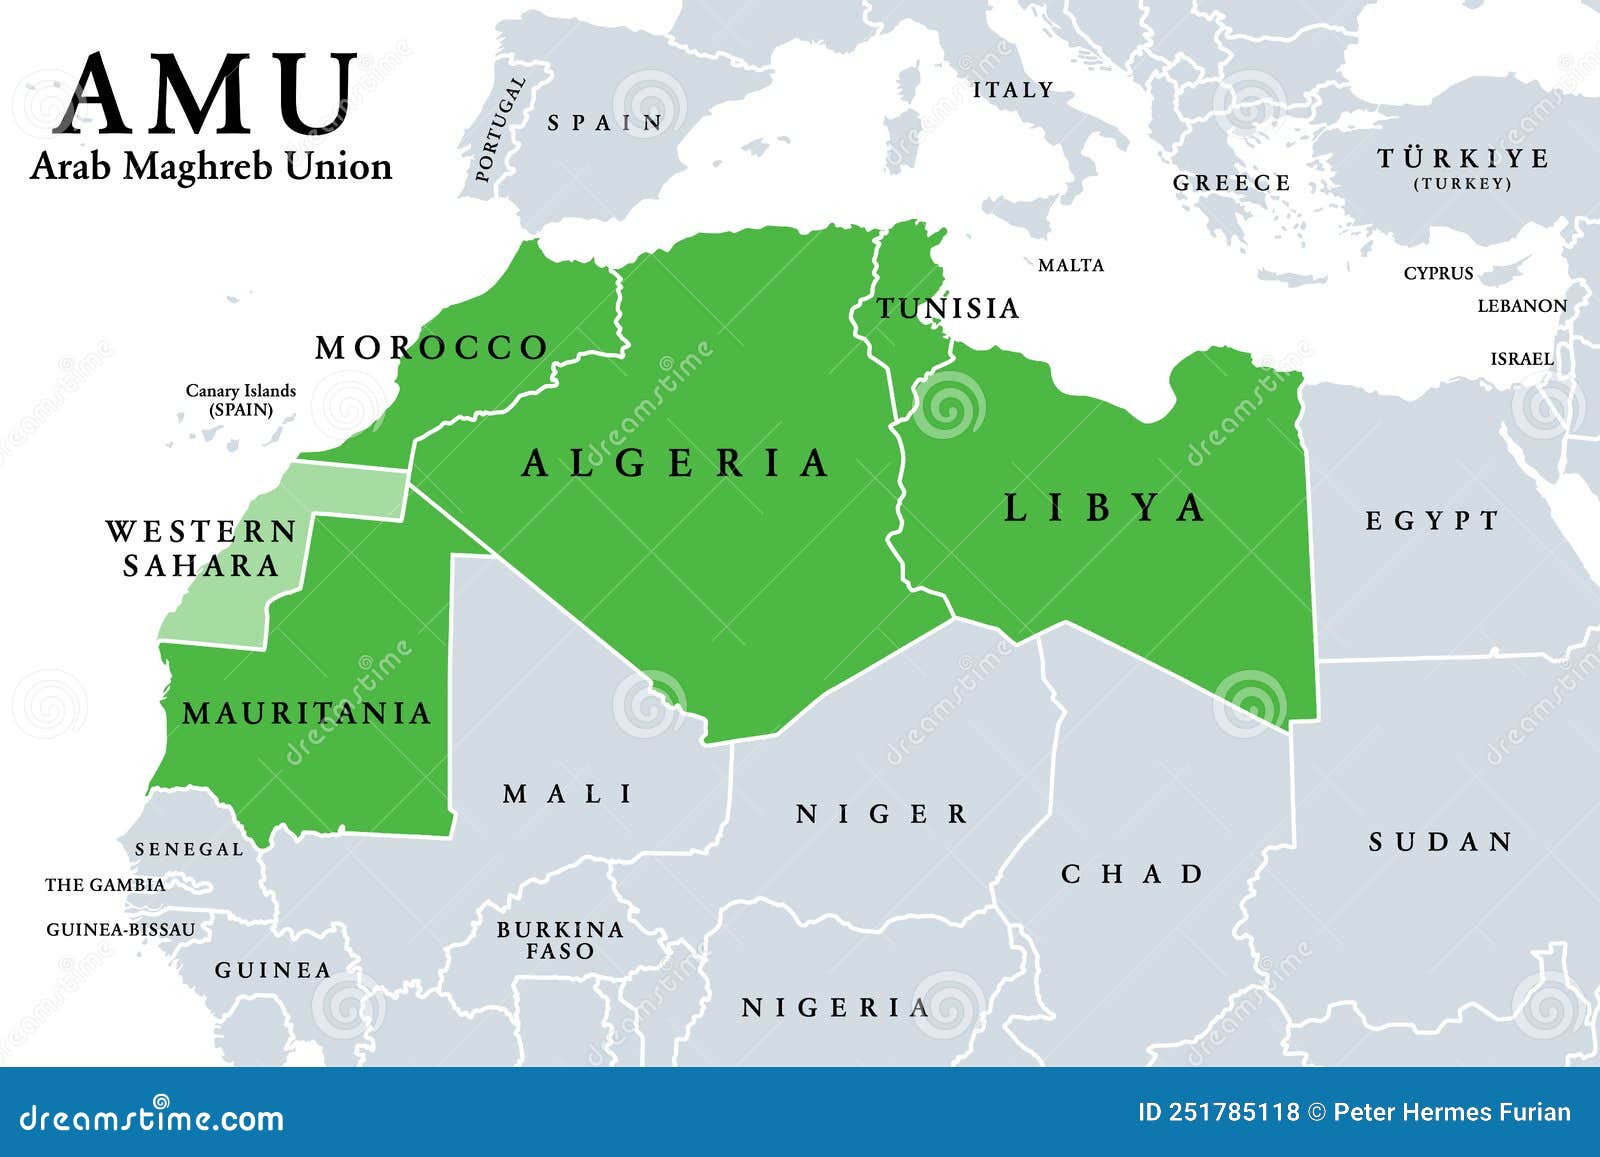 arab maghreb union, amu, member states, political map